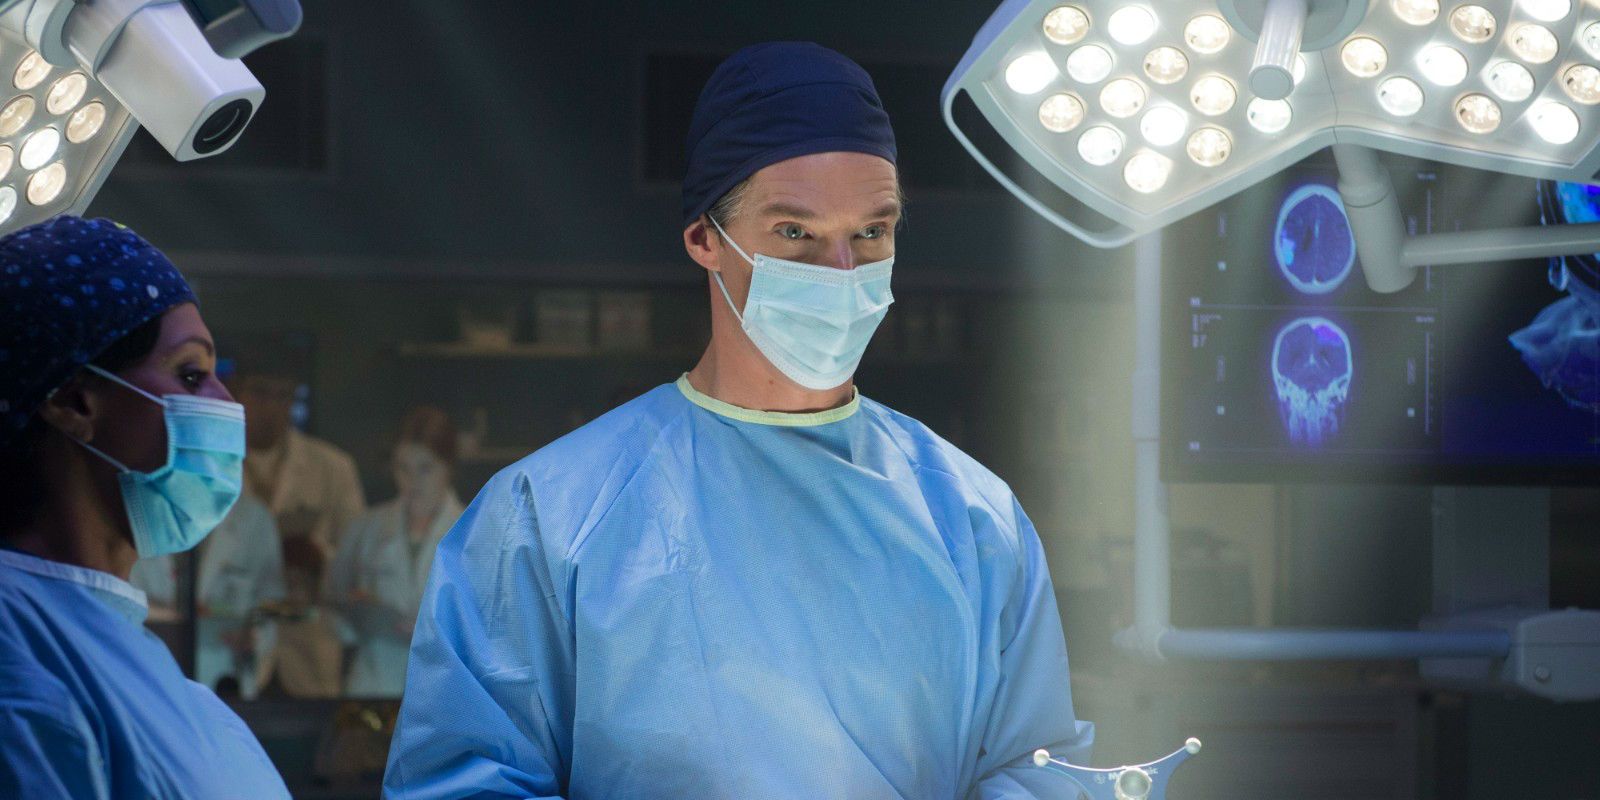 Doctor Strange Surgeon Benedict Cumberbatch